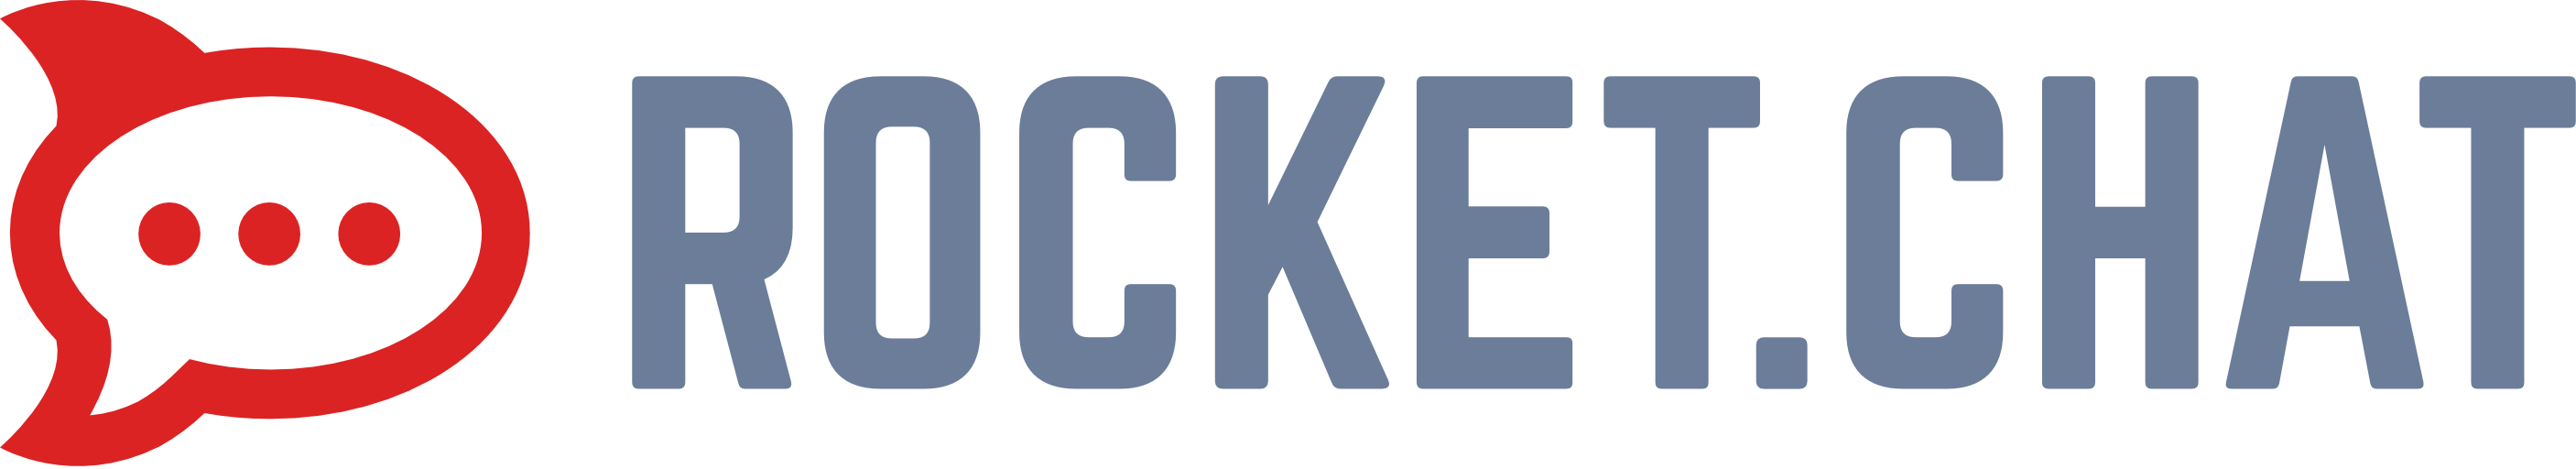 rocketchat windows client